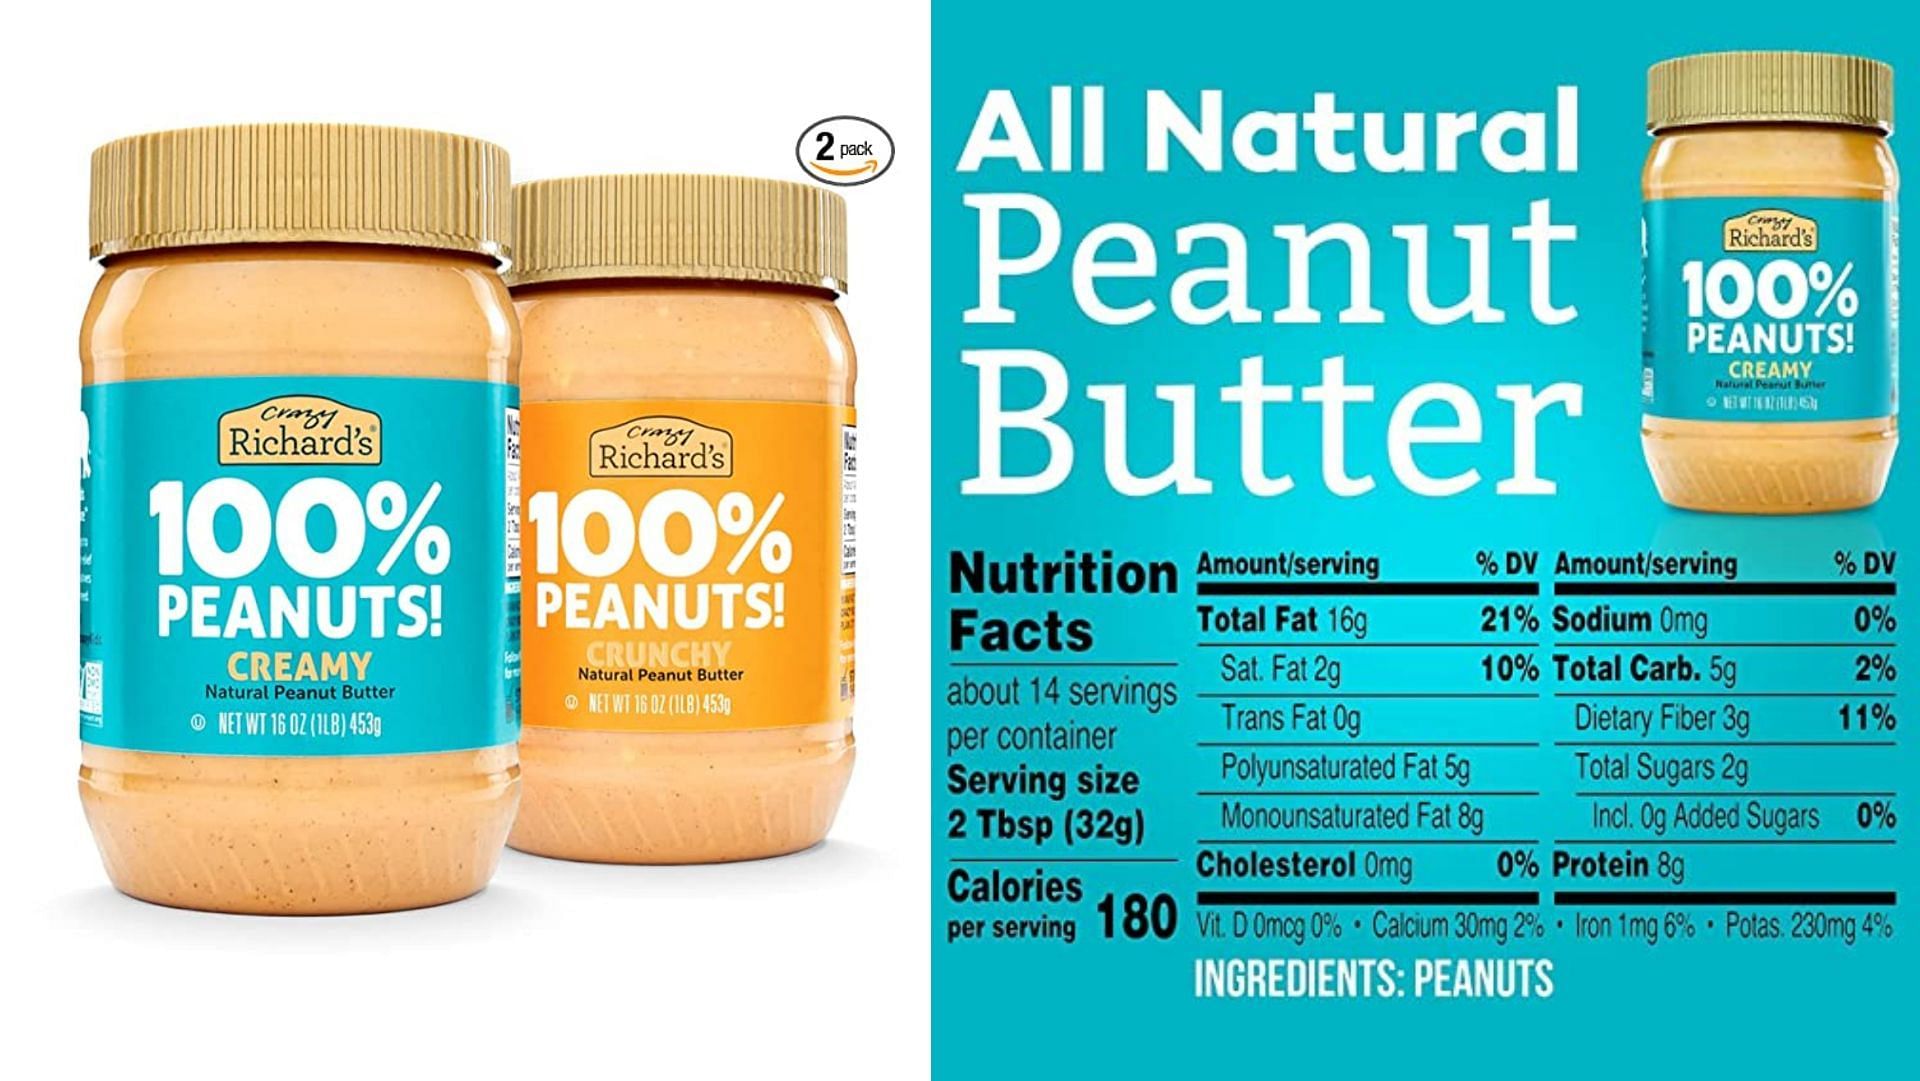 Crazy Richard&#039;s 100% All Natural Peanut Butter (Image via Amazon)